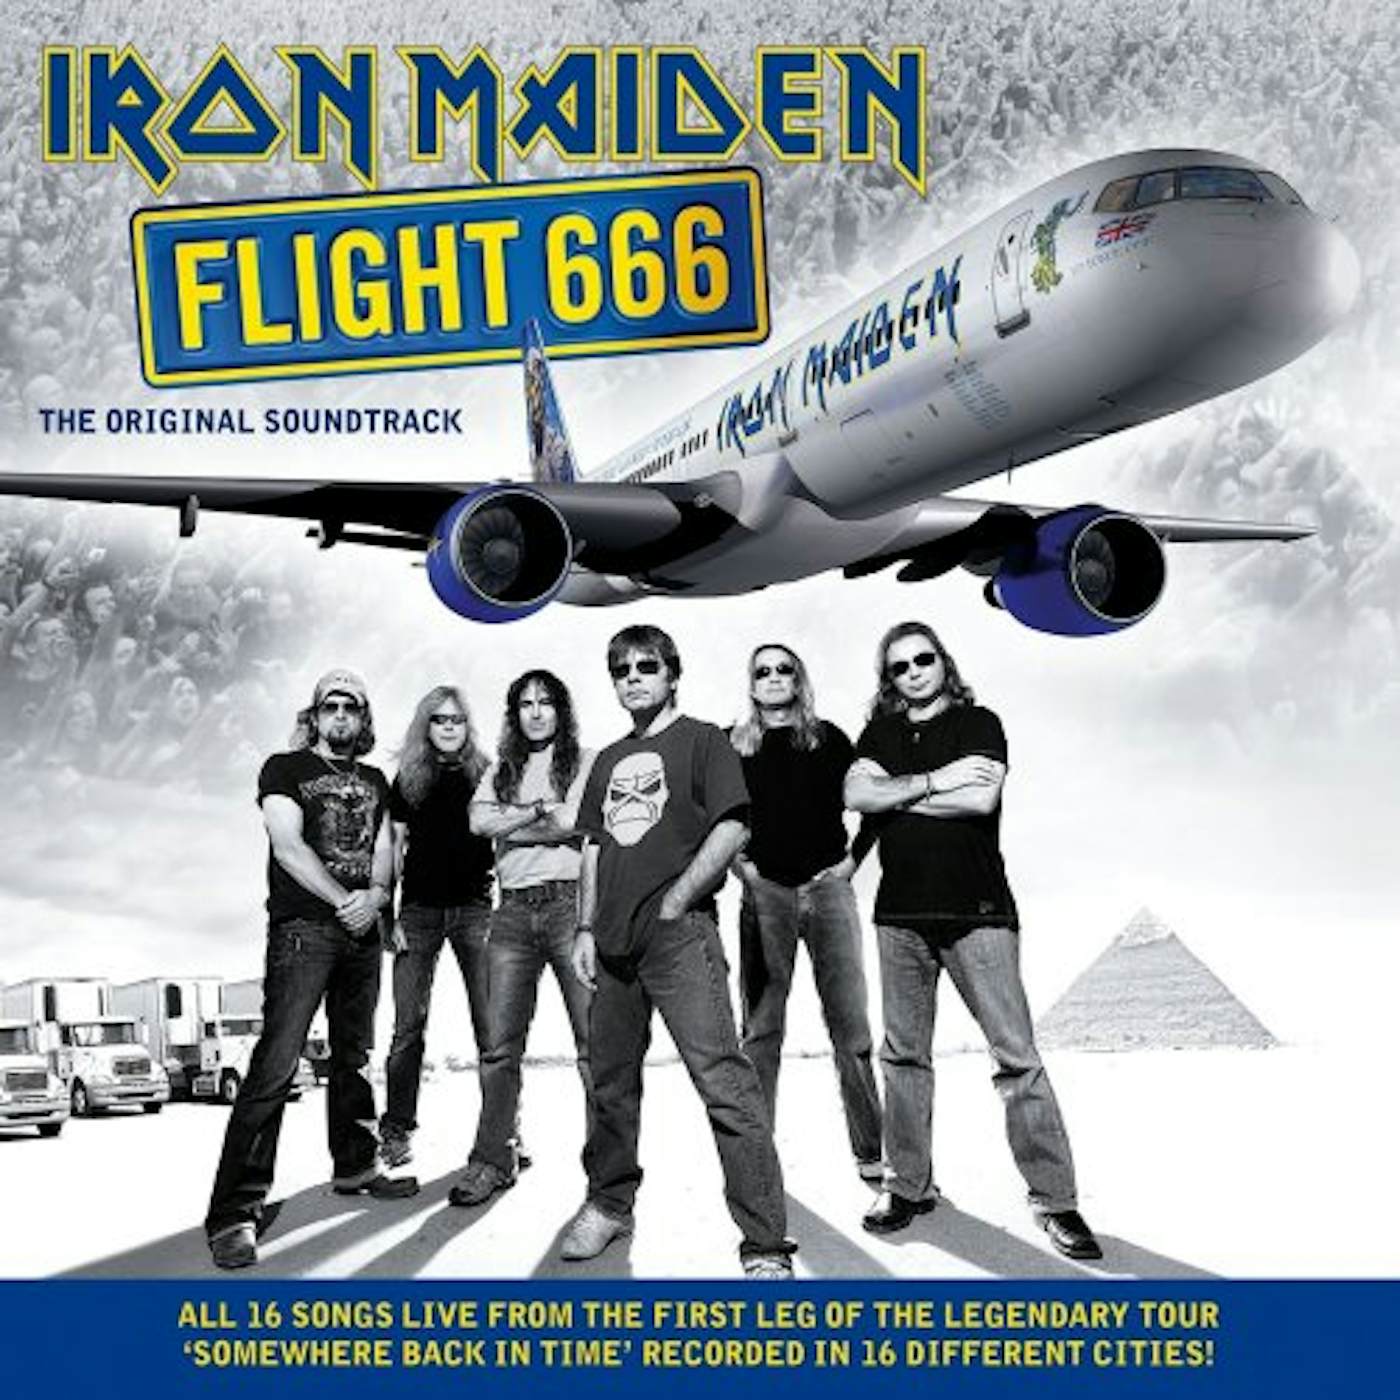 Iron Maiden FLIGHT 666: THE ORIGINAL SOUNDTRACK CD